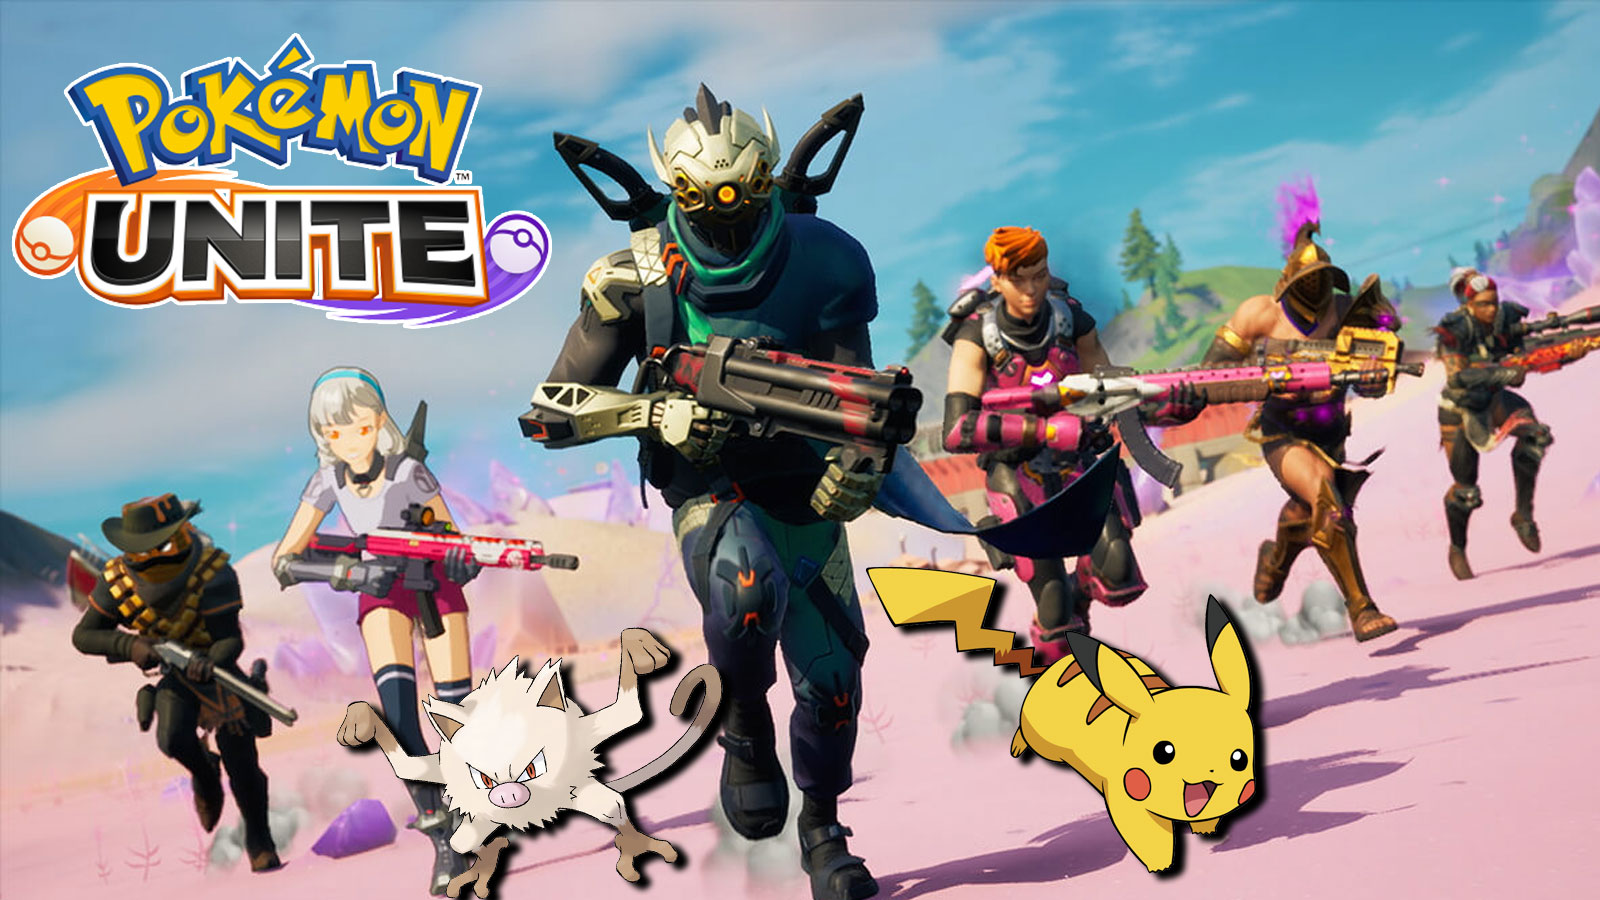 Pokémon Unite brings online team battles to mobile next month